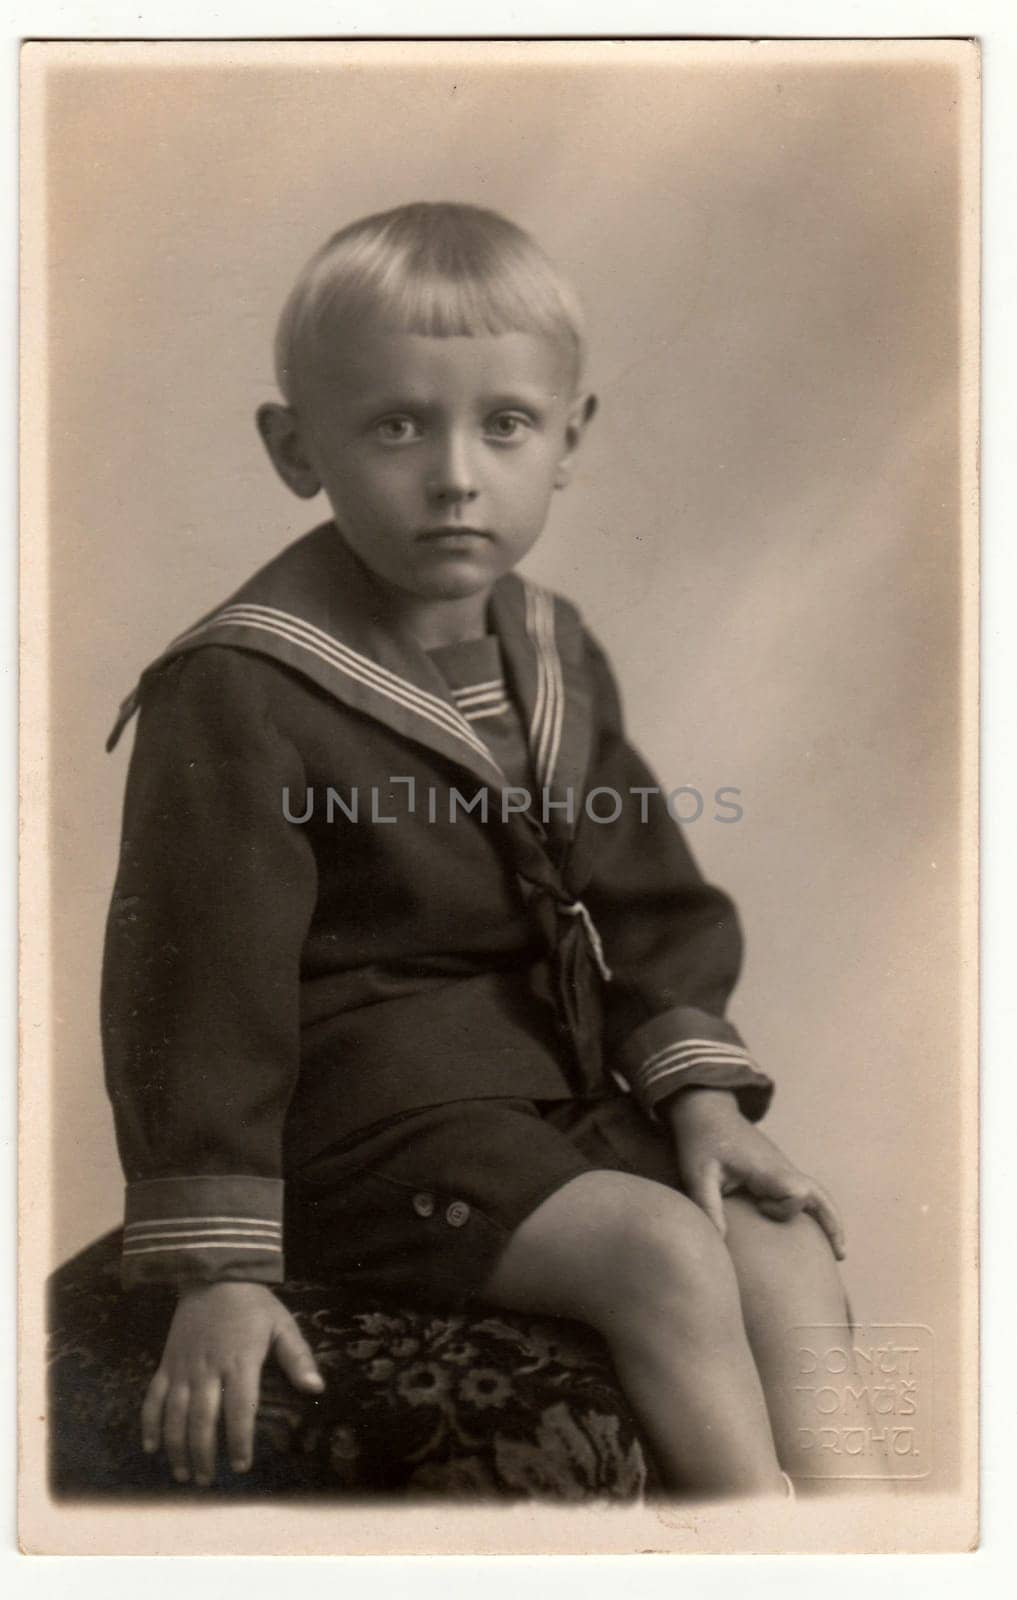 PRAHA (PRAGUE) THE CZECHOSLOVAK REPUBLIC - CIRCA 1946: Vintage photo shows a young boy wears sailor costume. Retro black and white photography. Circa 1950s.